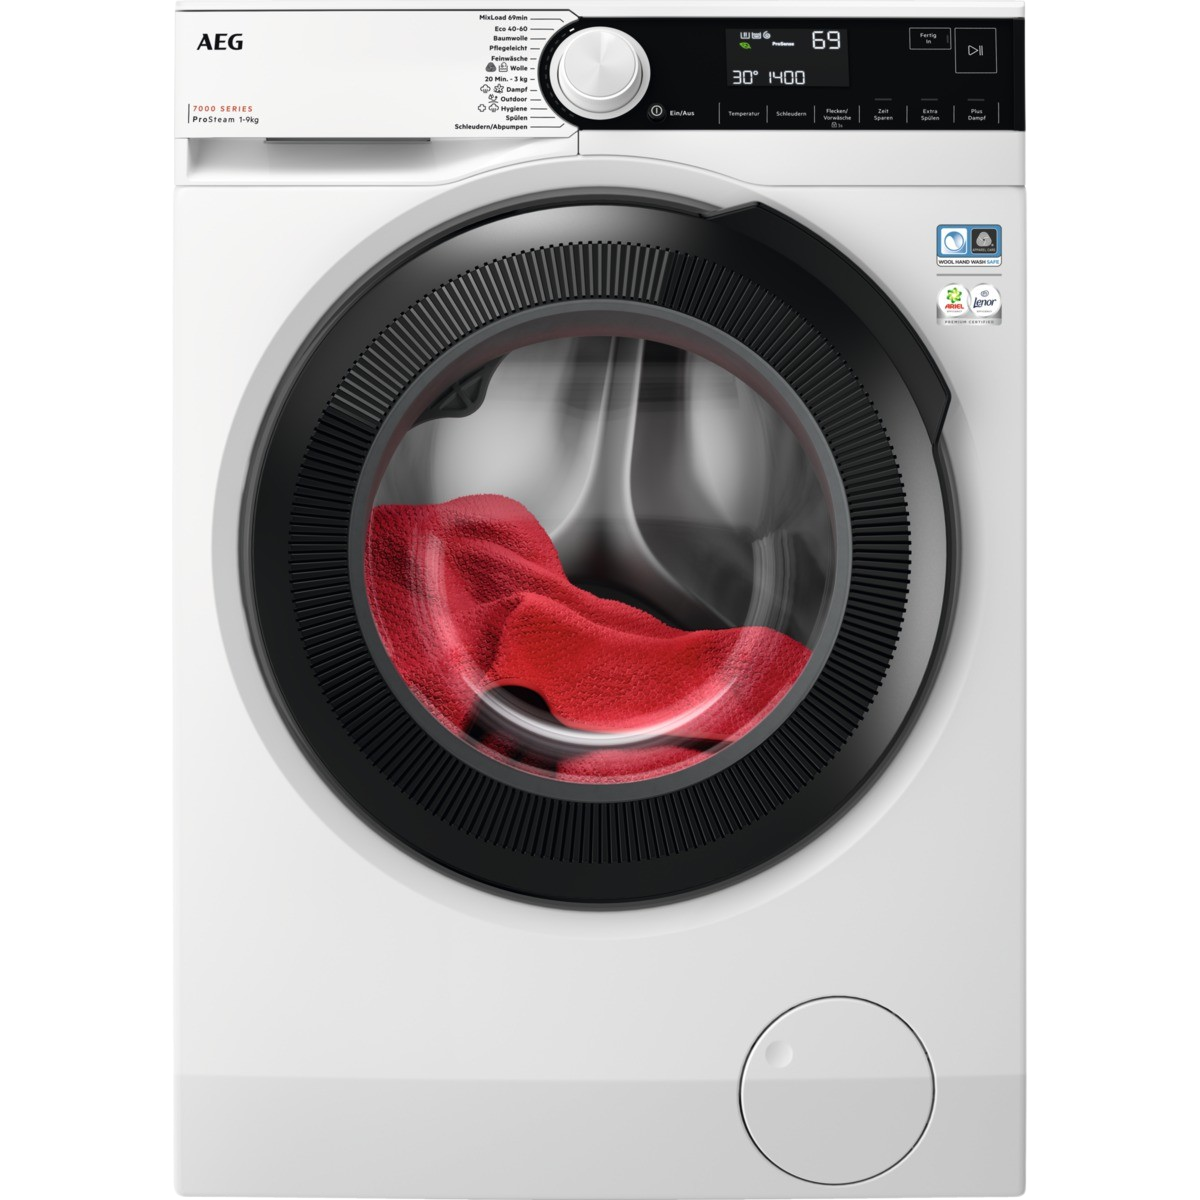 Rent Siemens iQ500 WG44G2040 Washing Machine from €34.90 per month